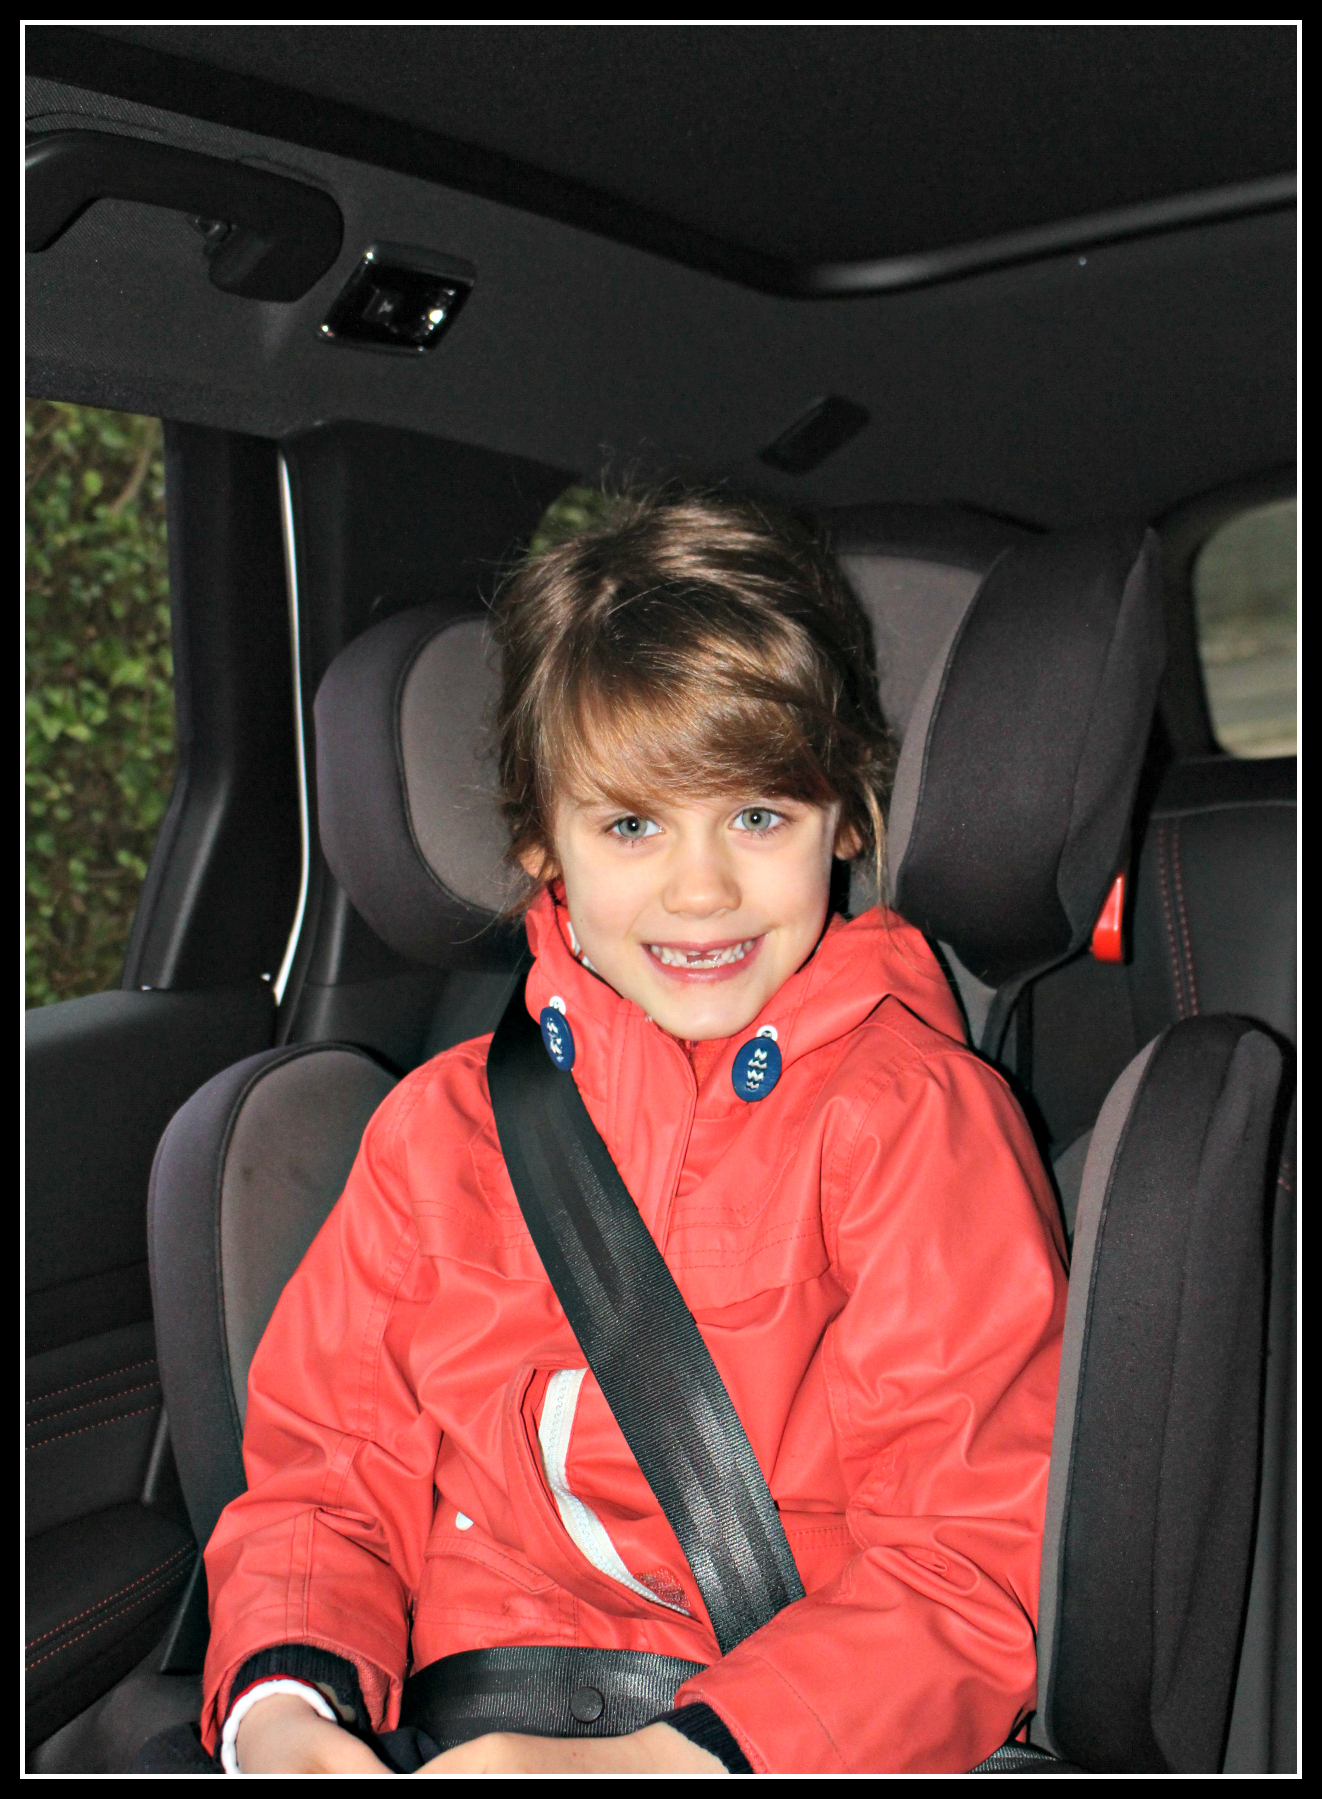 Peugeot, Peugeot 308 SW, review, reviews,, car, driving, motoring, child friendly features